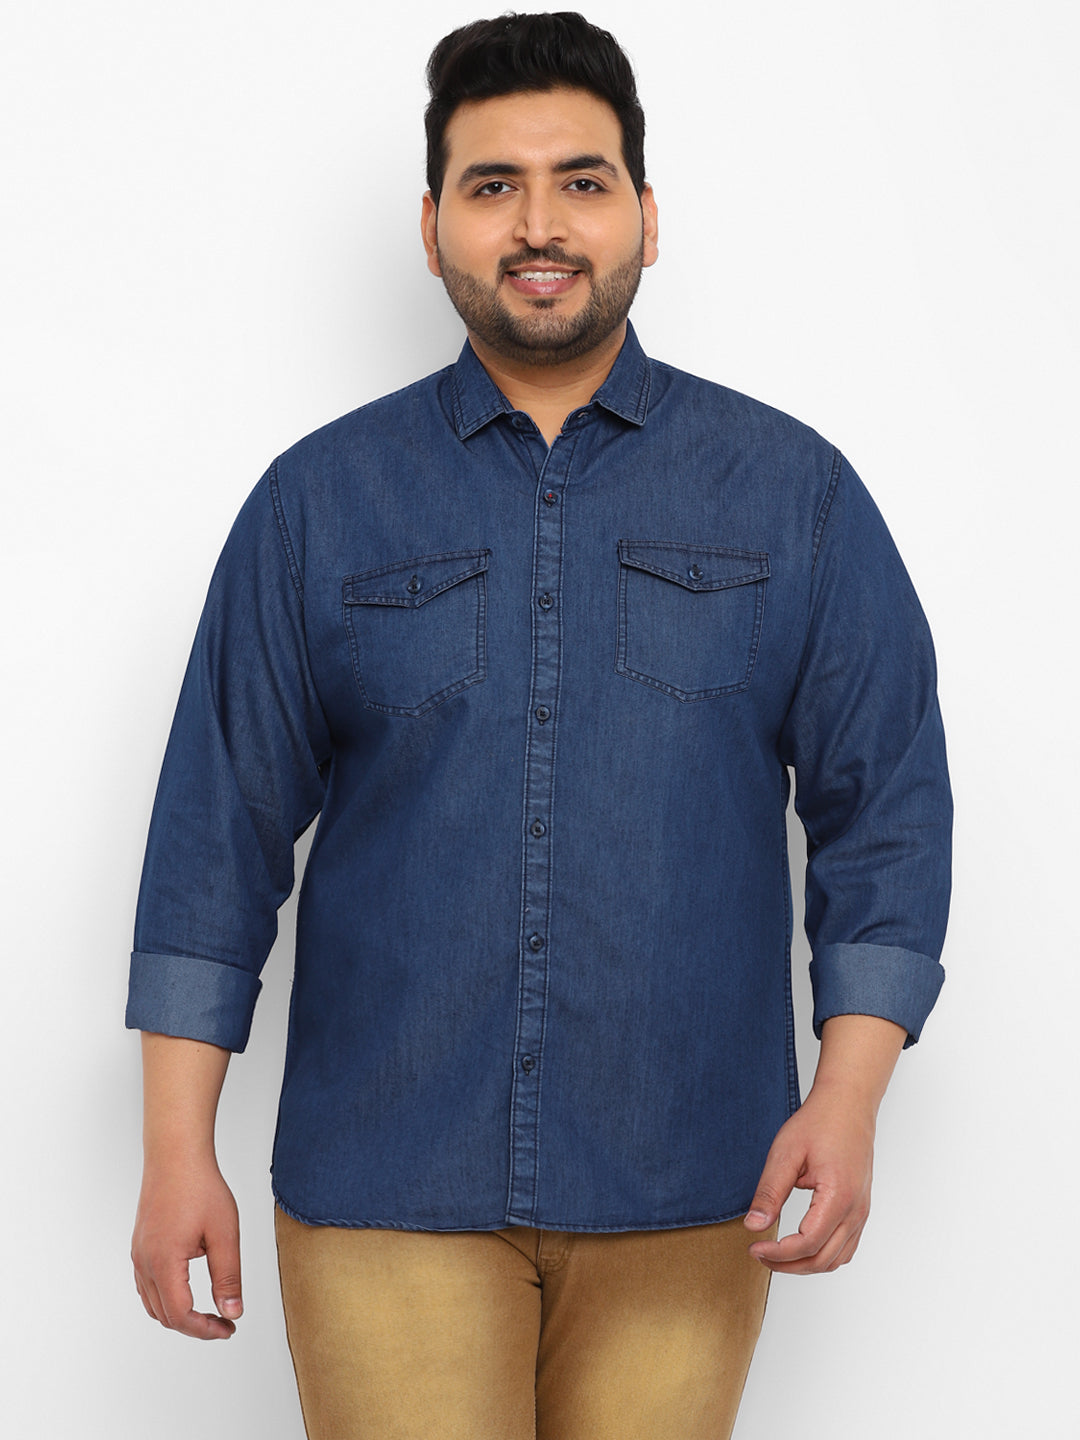 Plus Men's Navy Blue Full Sleeve Regular Fit Casual Denim Shirt